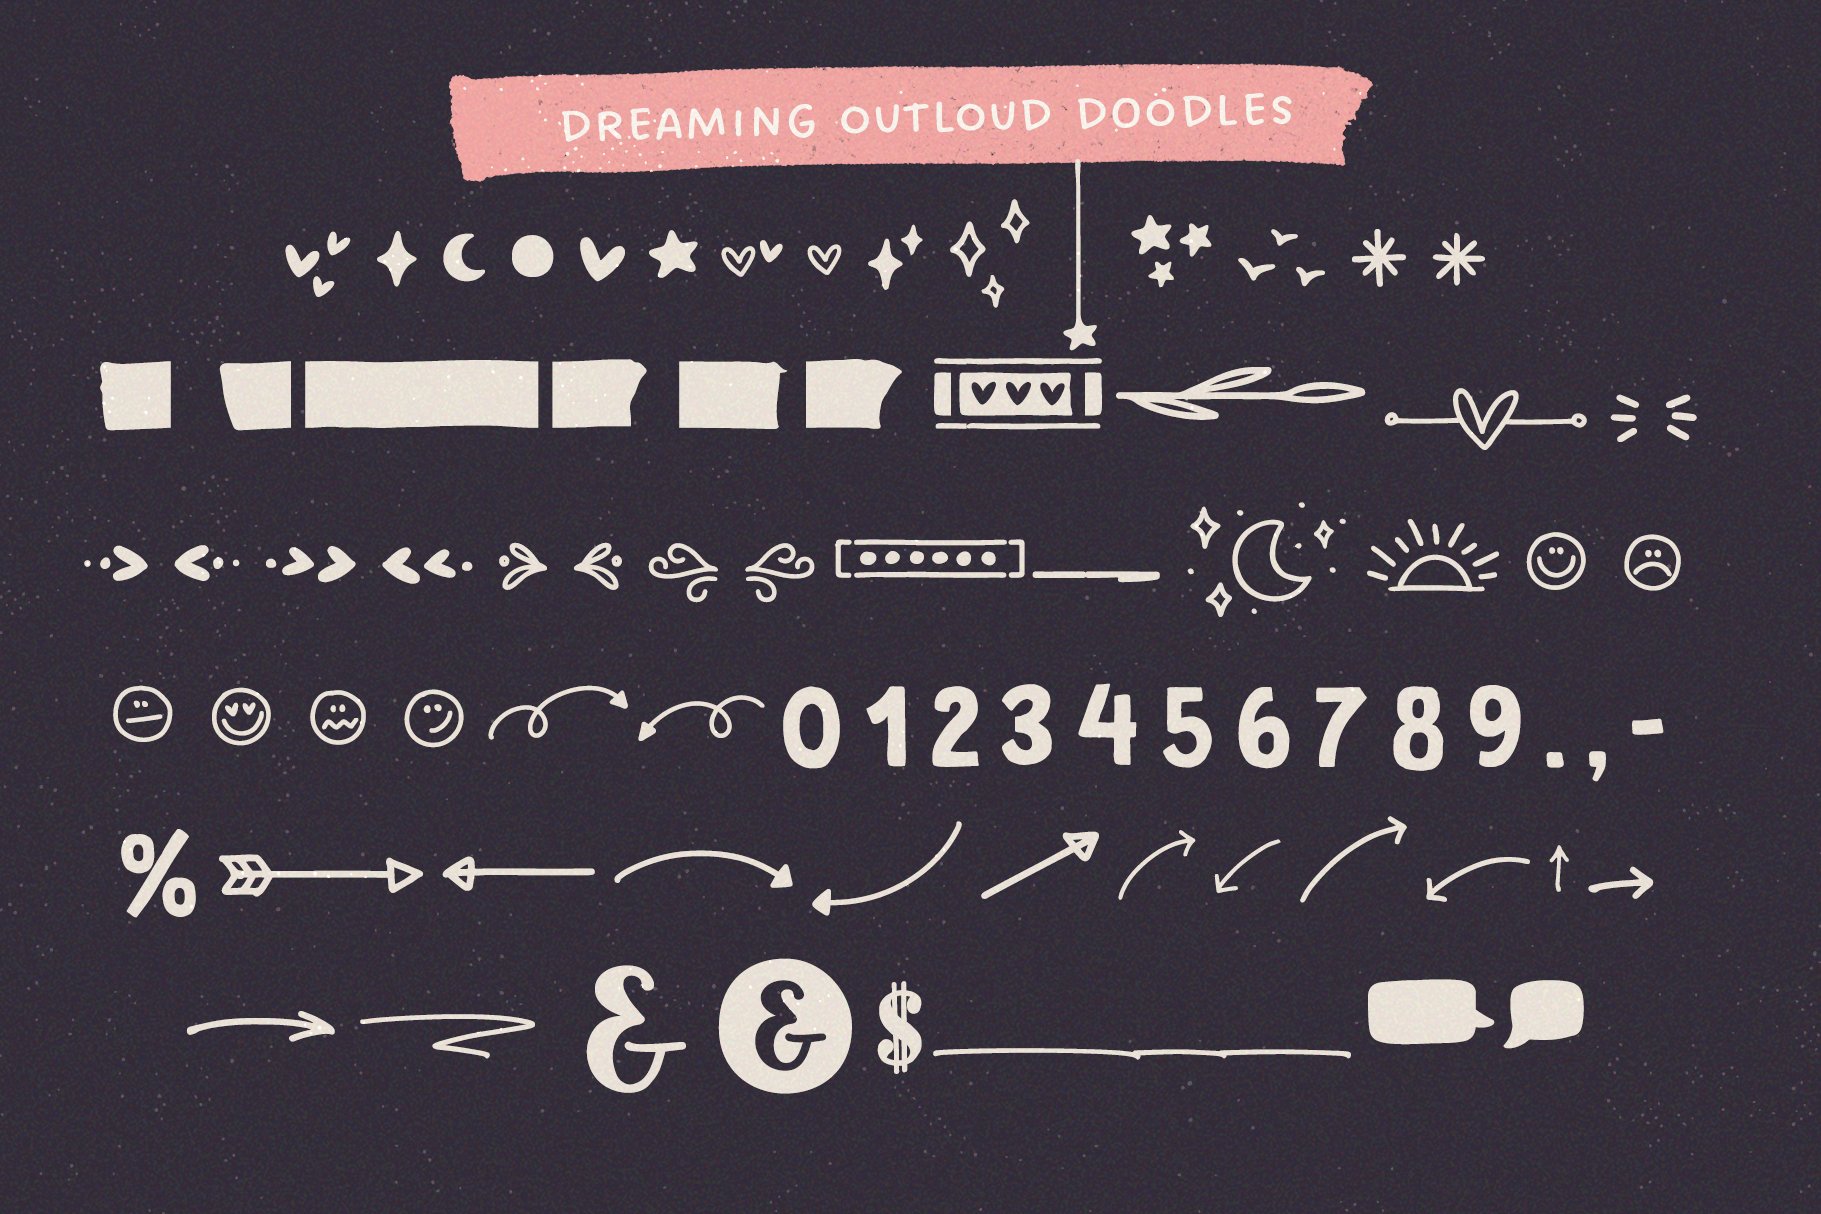 dreaming outloud doodles 69